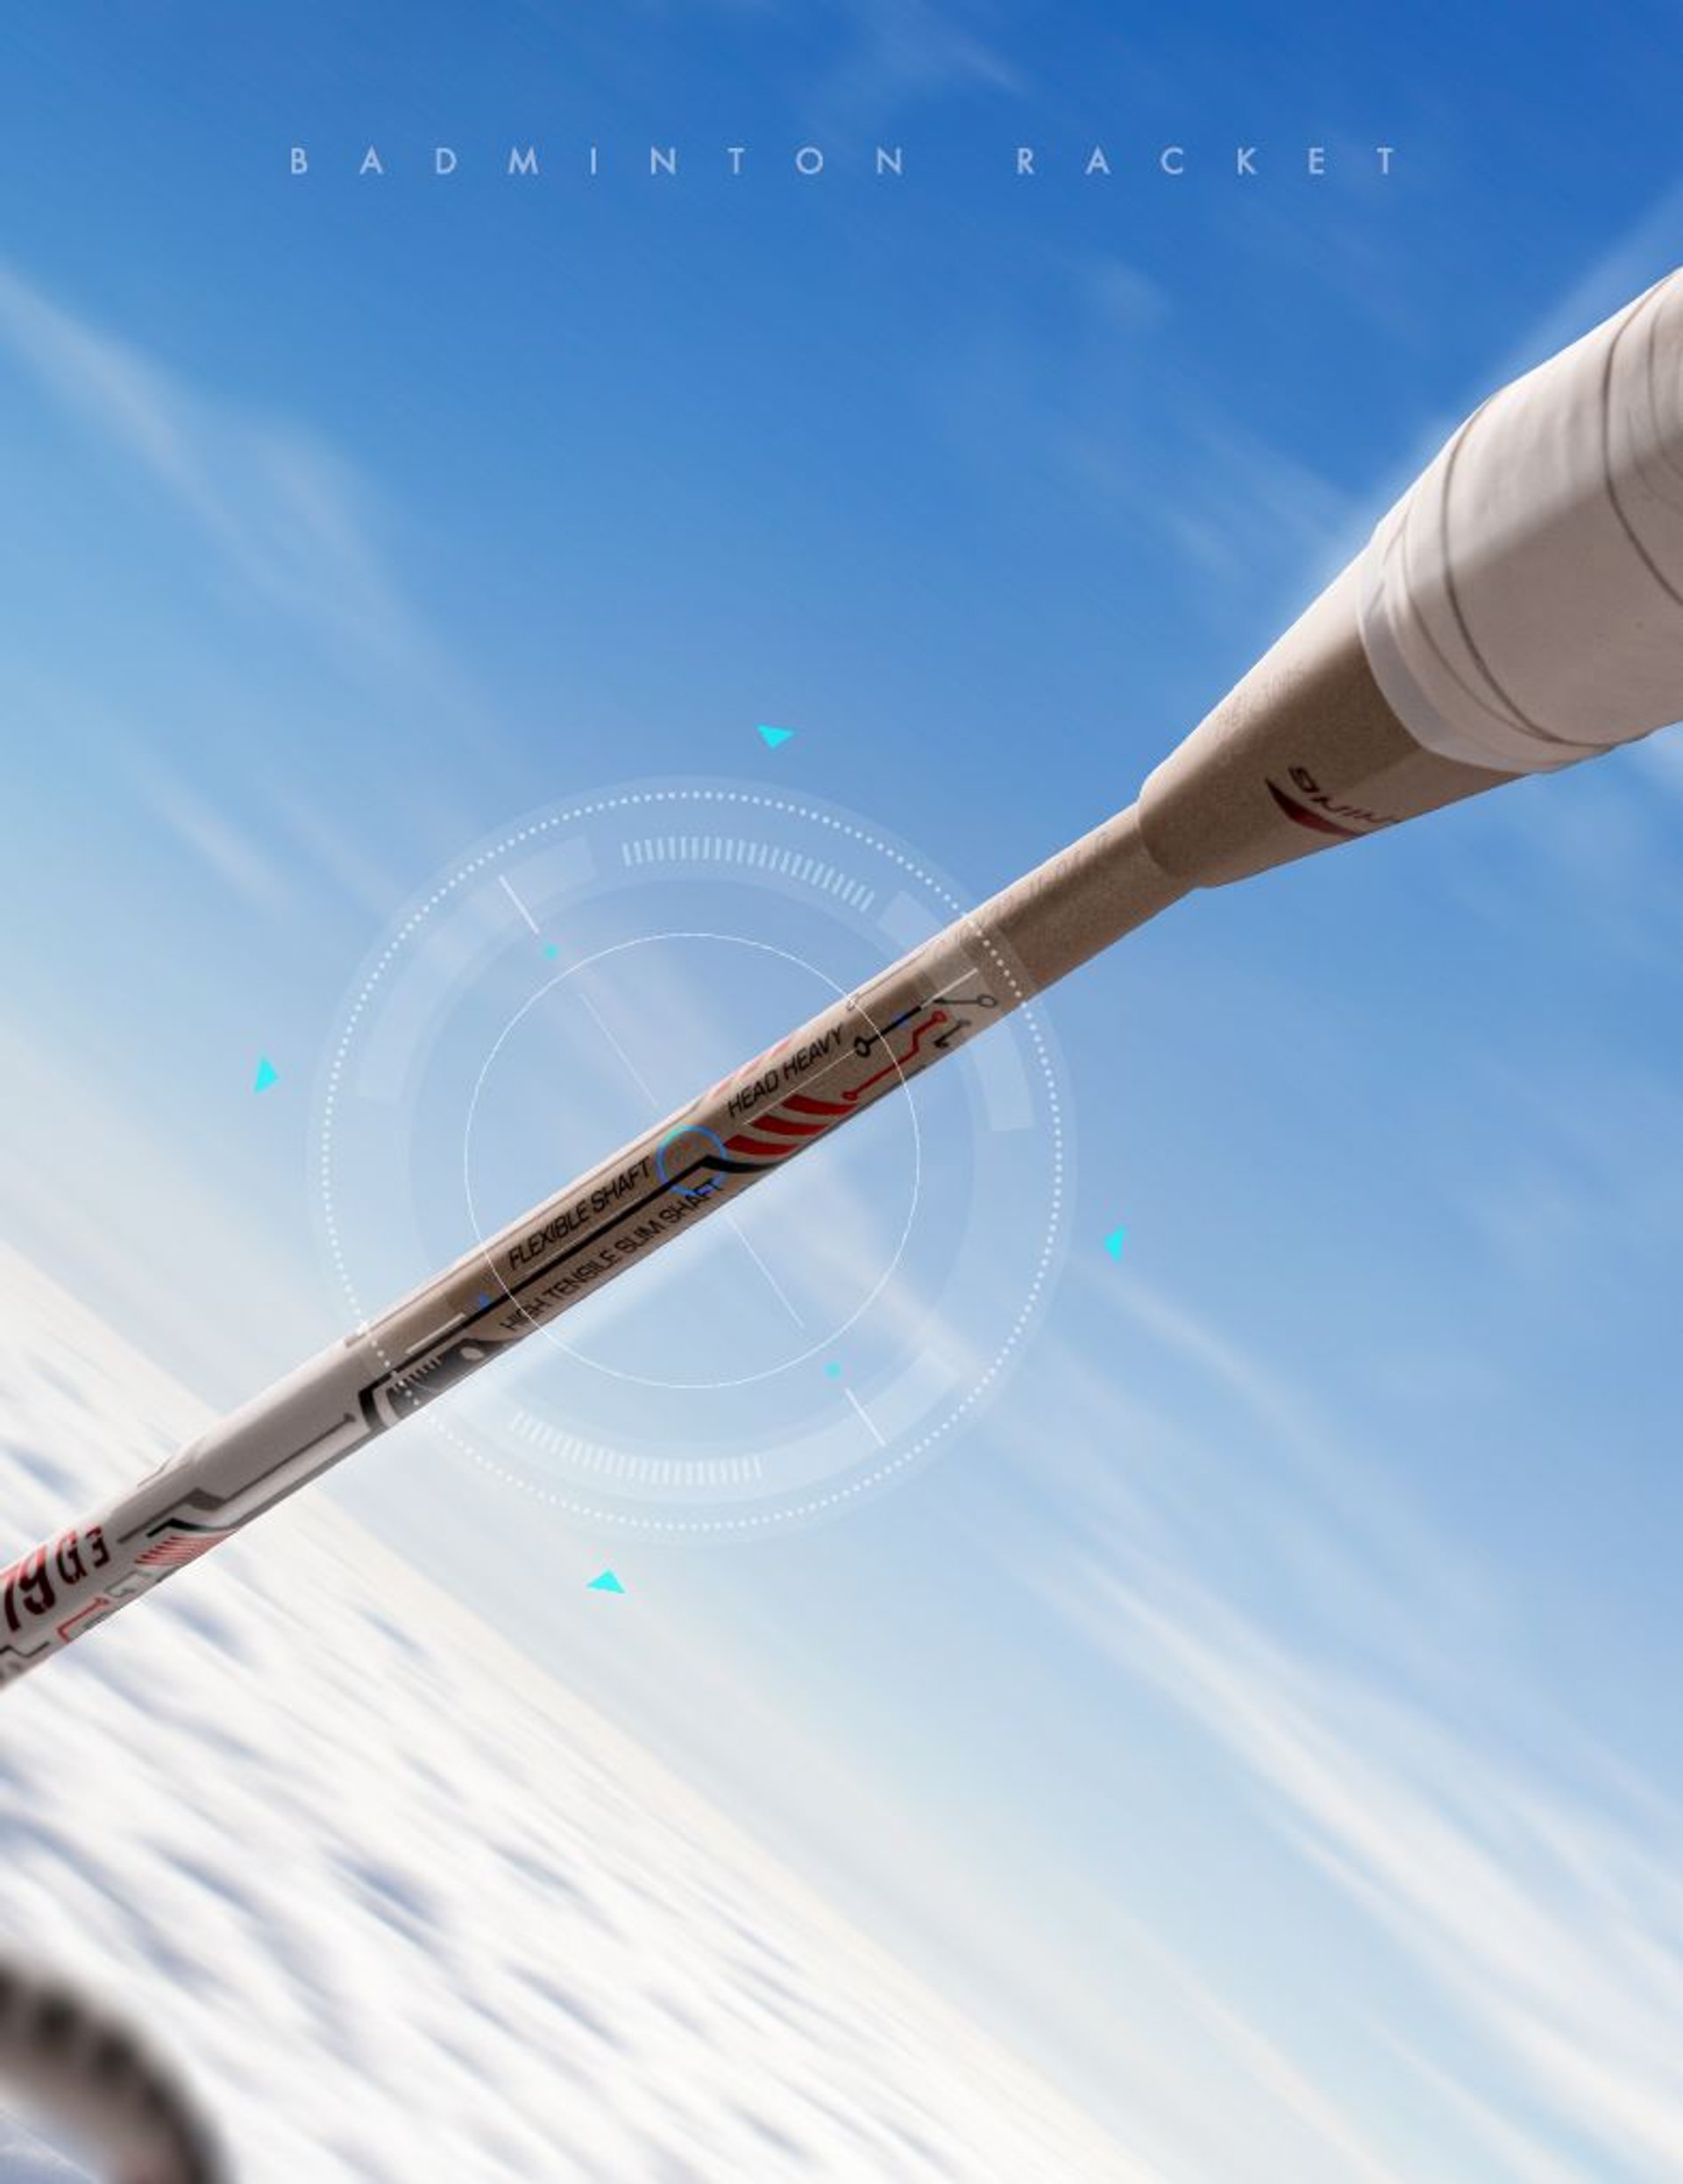 Air Force G3 - Badminton Racket - Superlight Technology